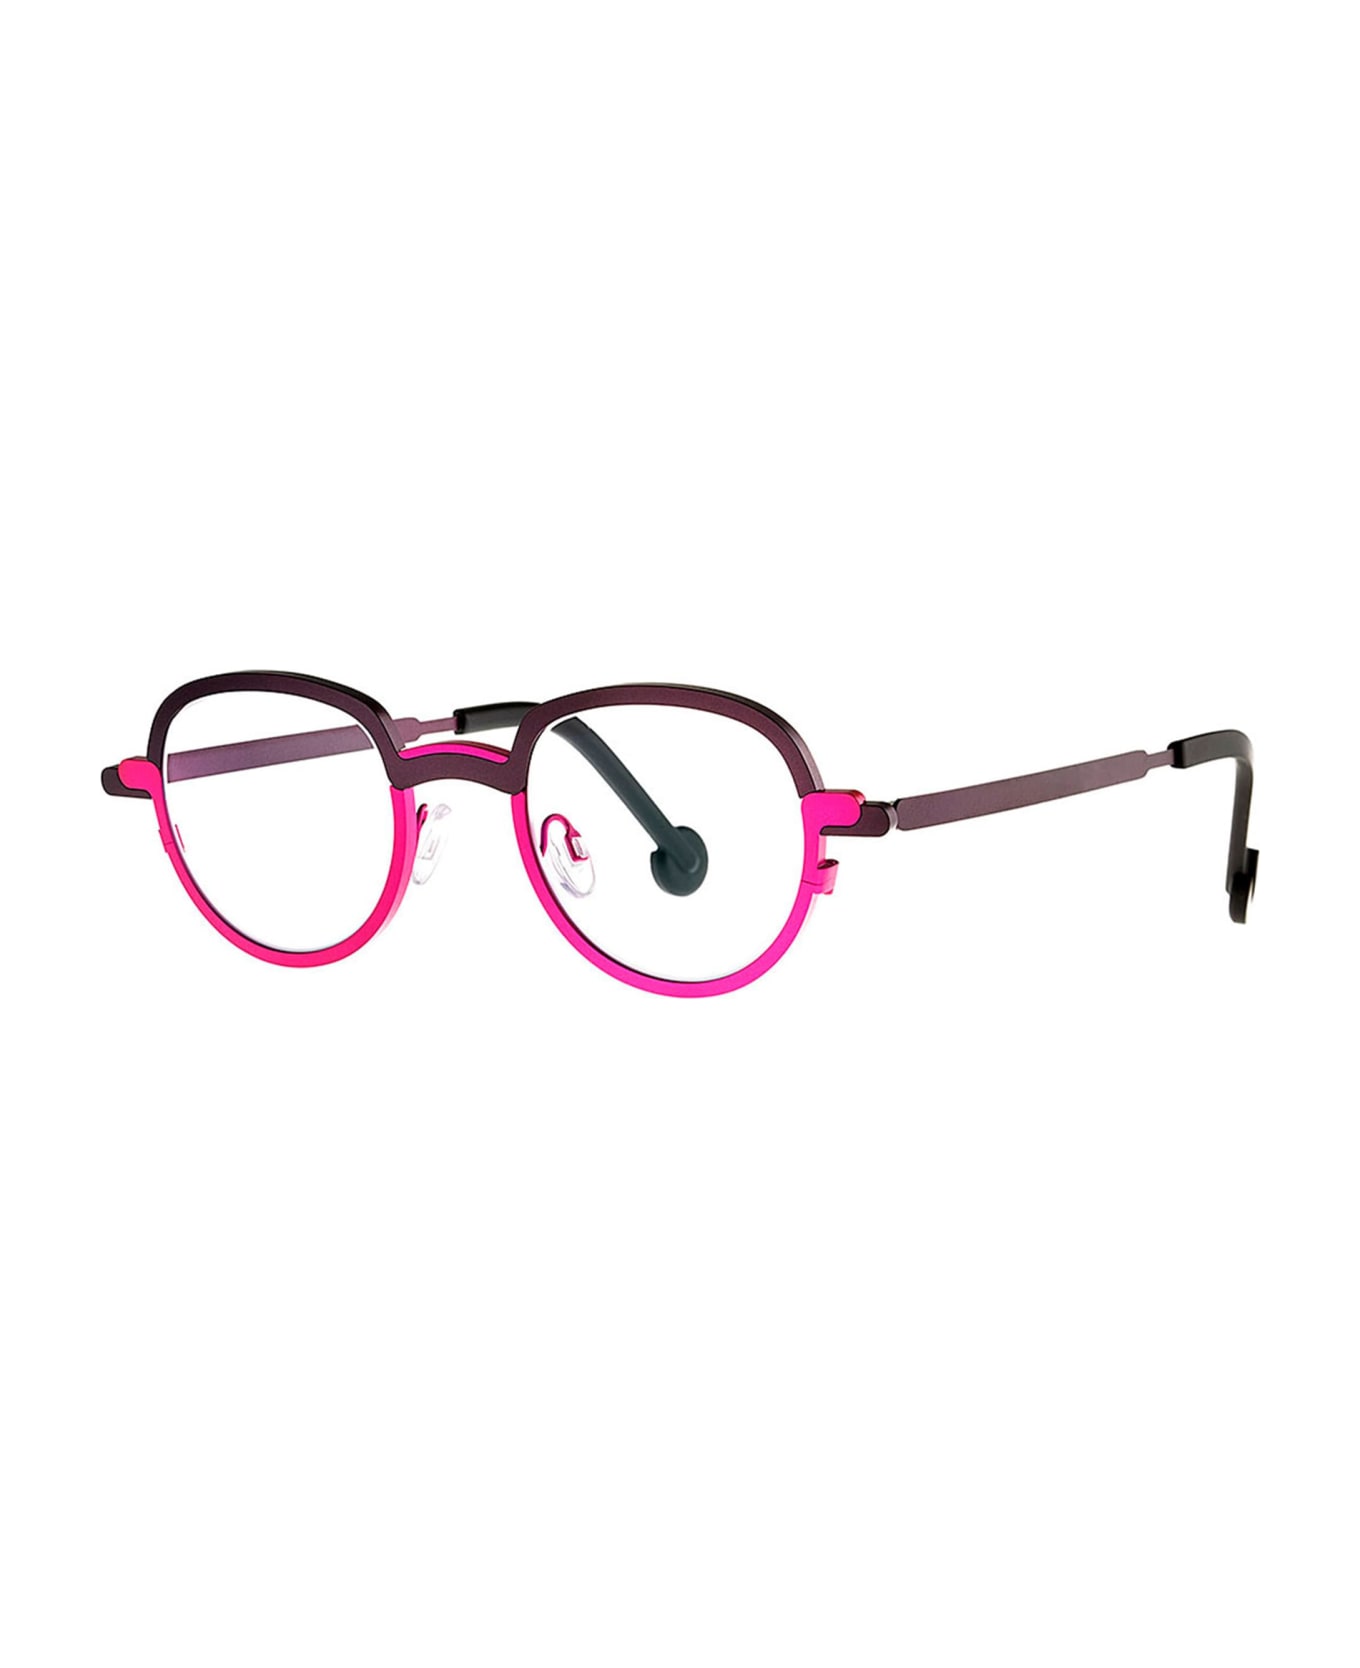 Theo Eyewear Mong Kok - 284 Rx Glasses - pink